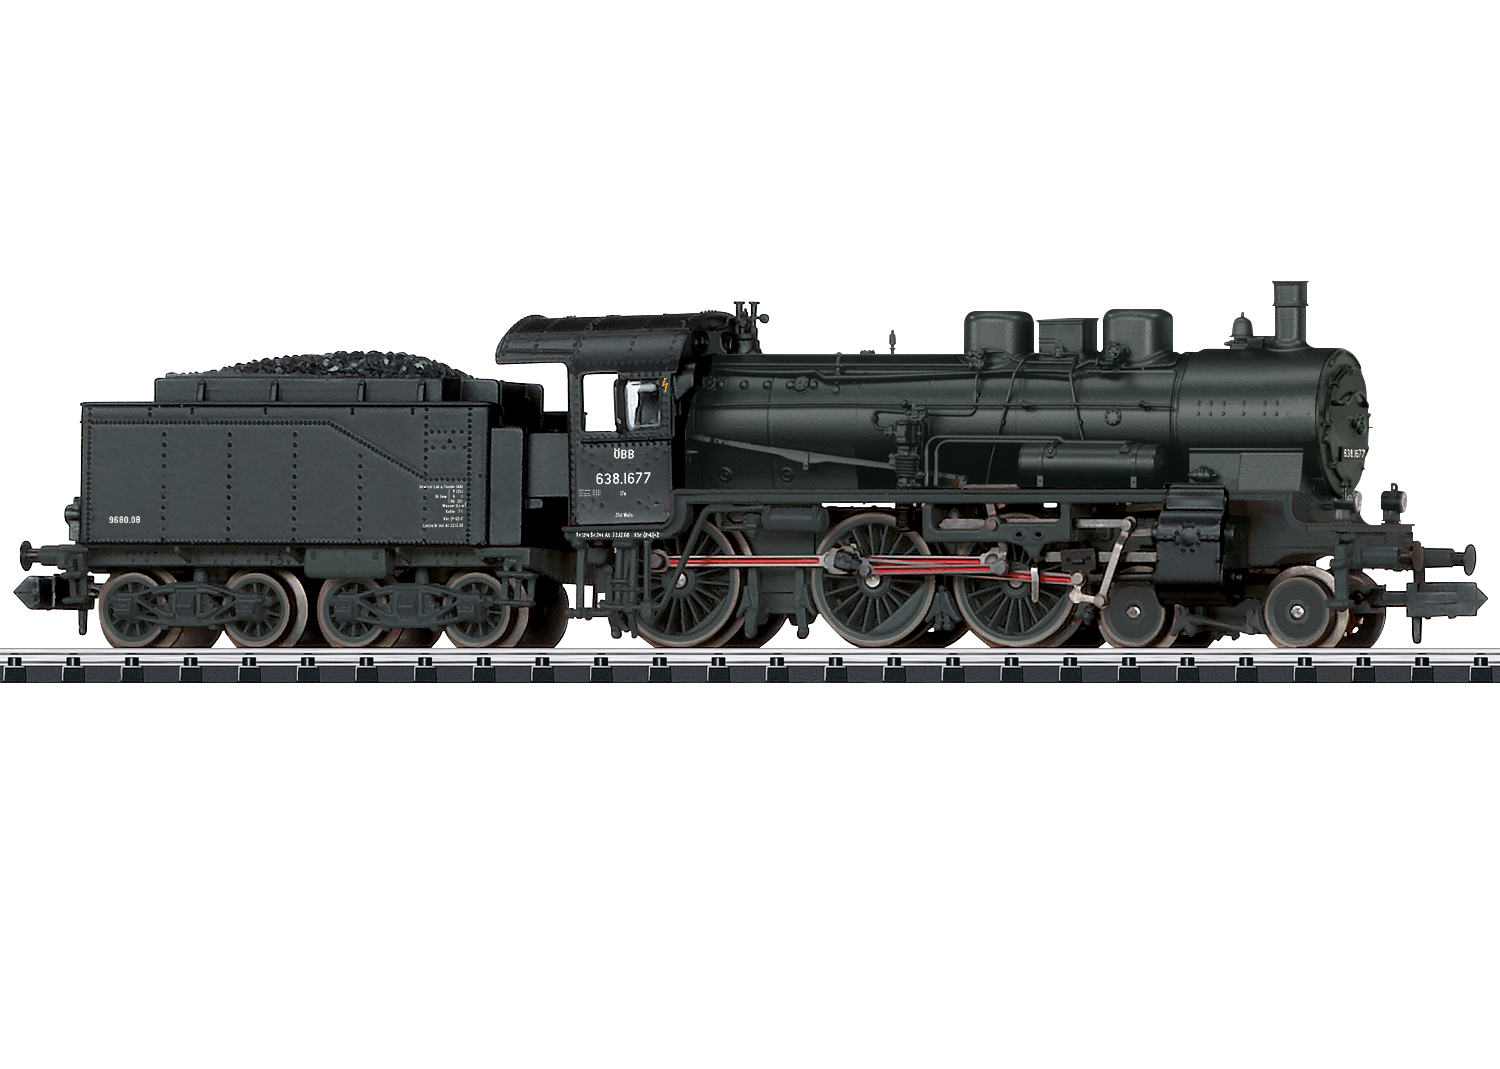 Trix 16387 Dampflokomotive Baureihe 638 Dampflokomotive Baureihe 638